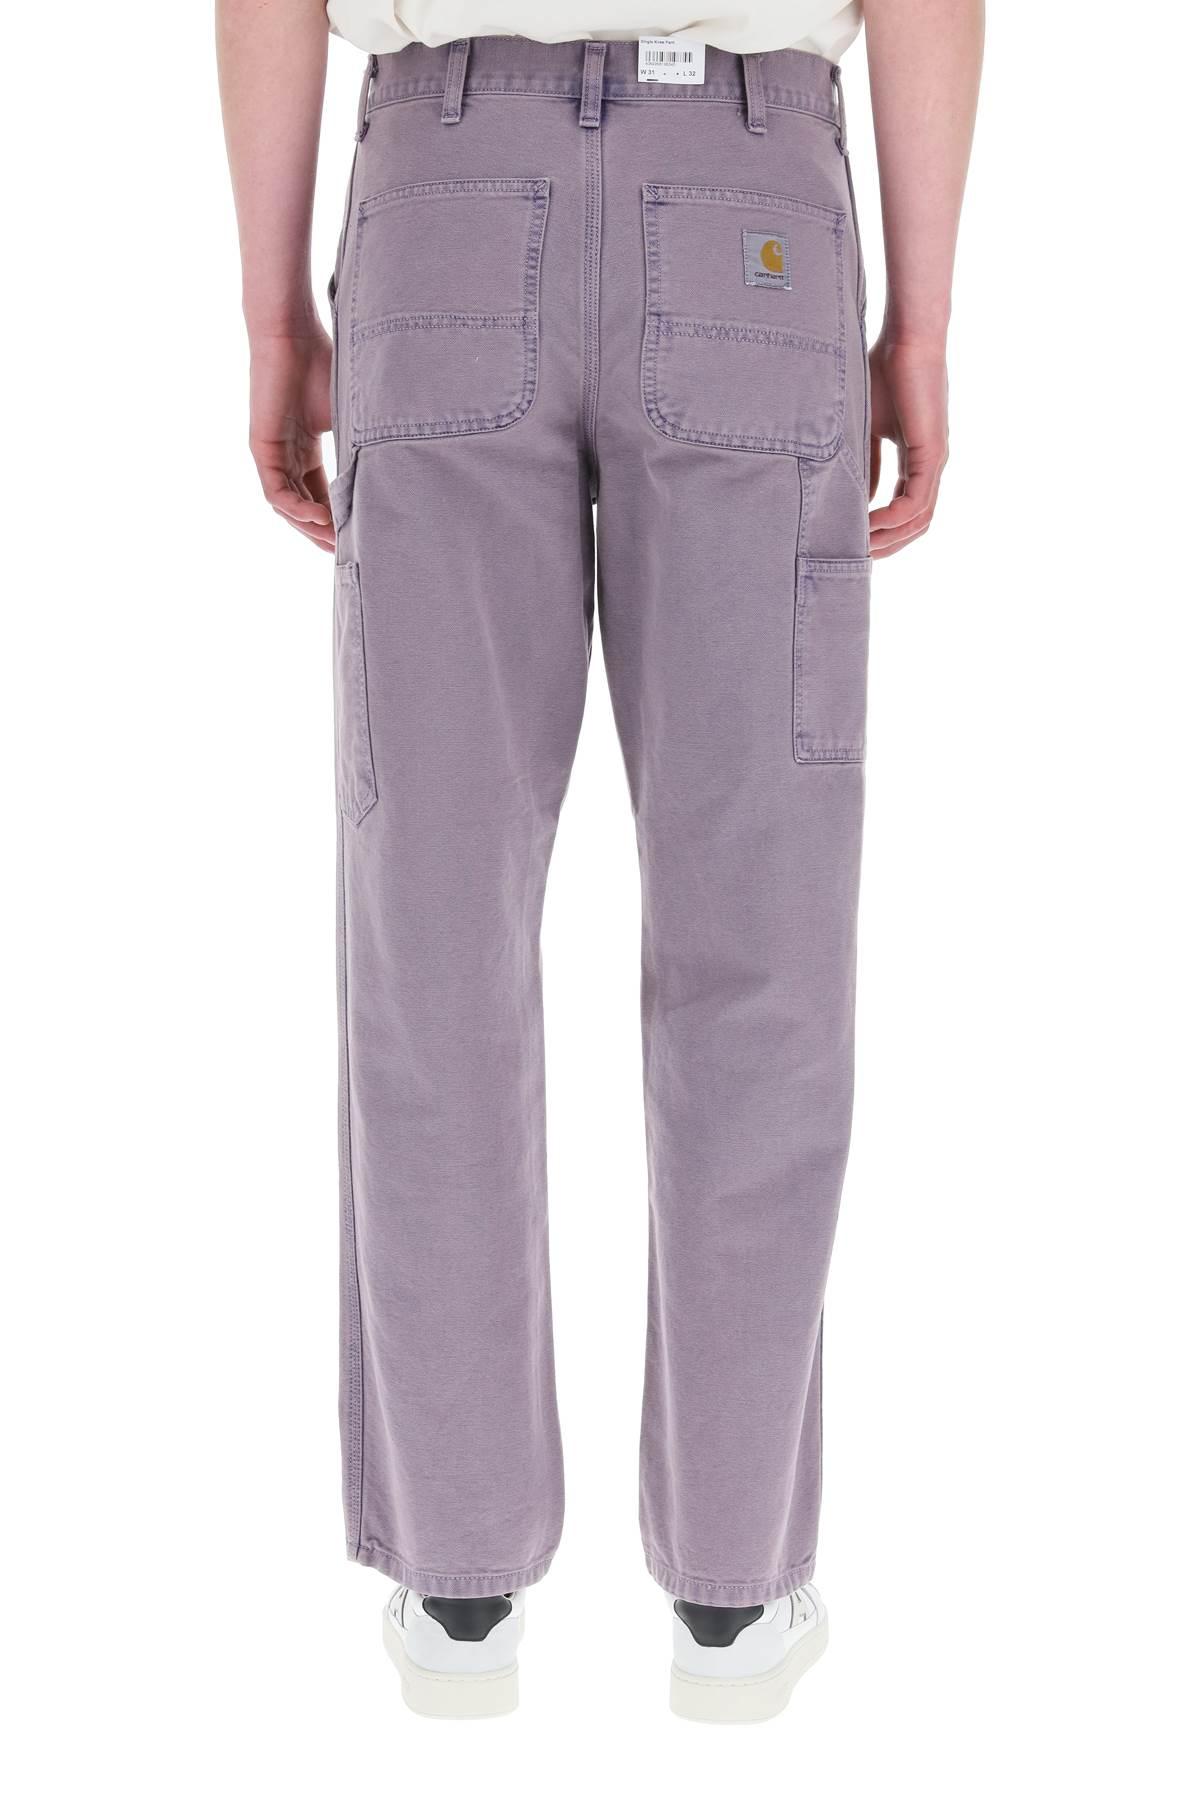 Carhartt WIP Single Knee Trousers In Dearborn Canvas in Purple for